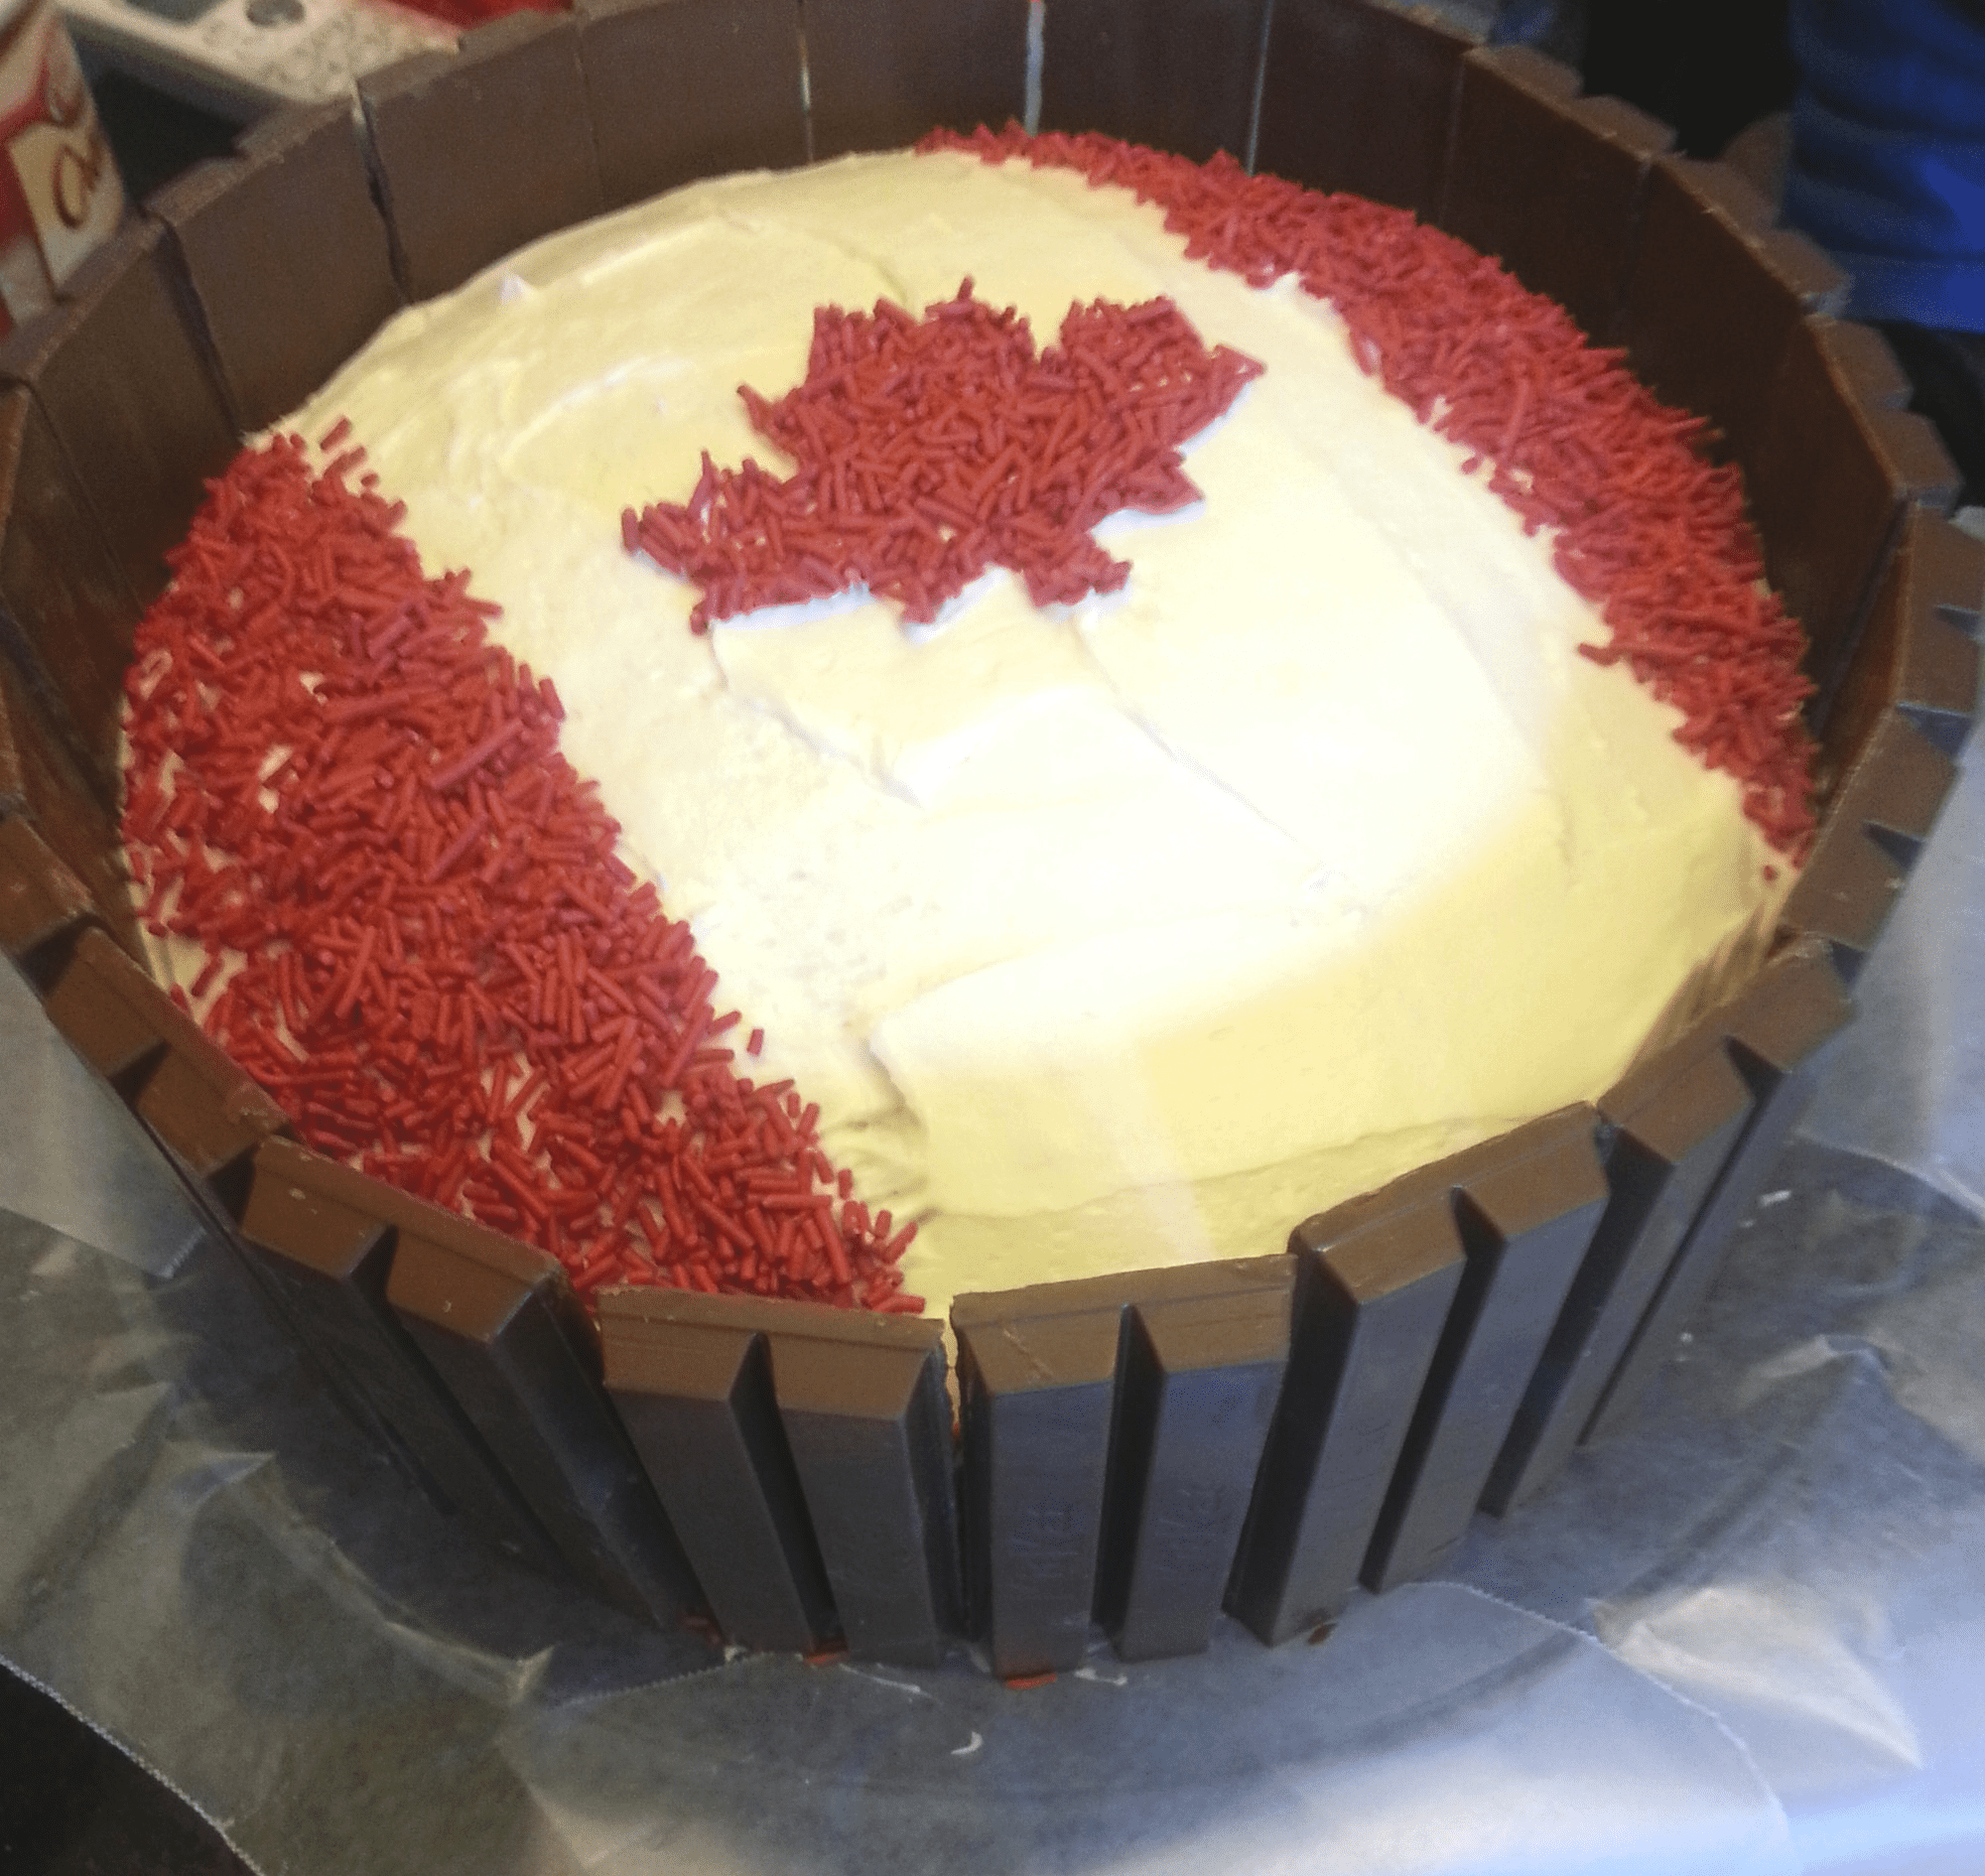 WELCOME TO CANADA FONDANT CAKE - Rashmi's Bakery